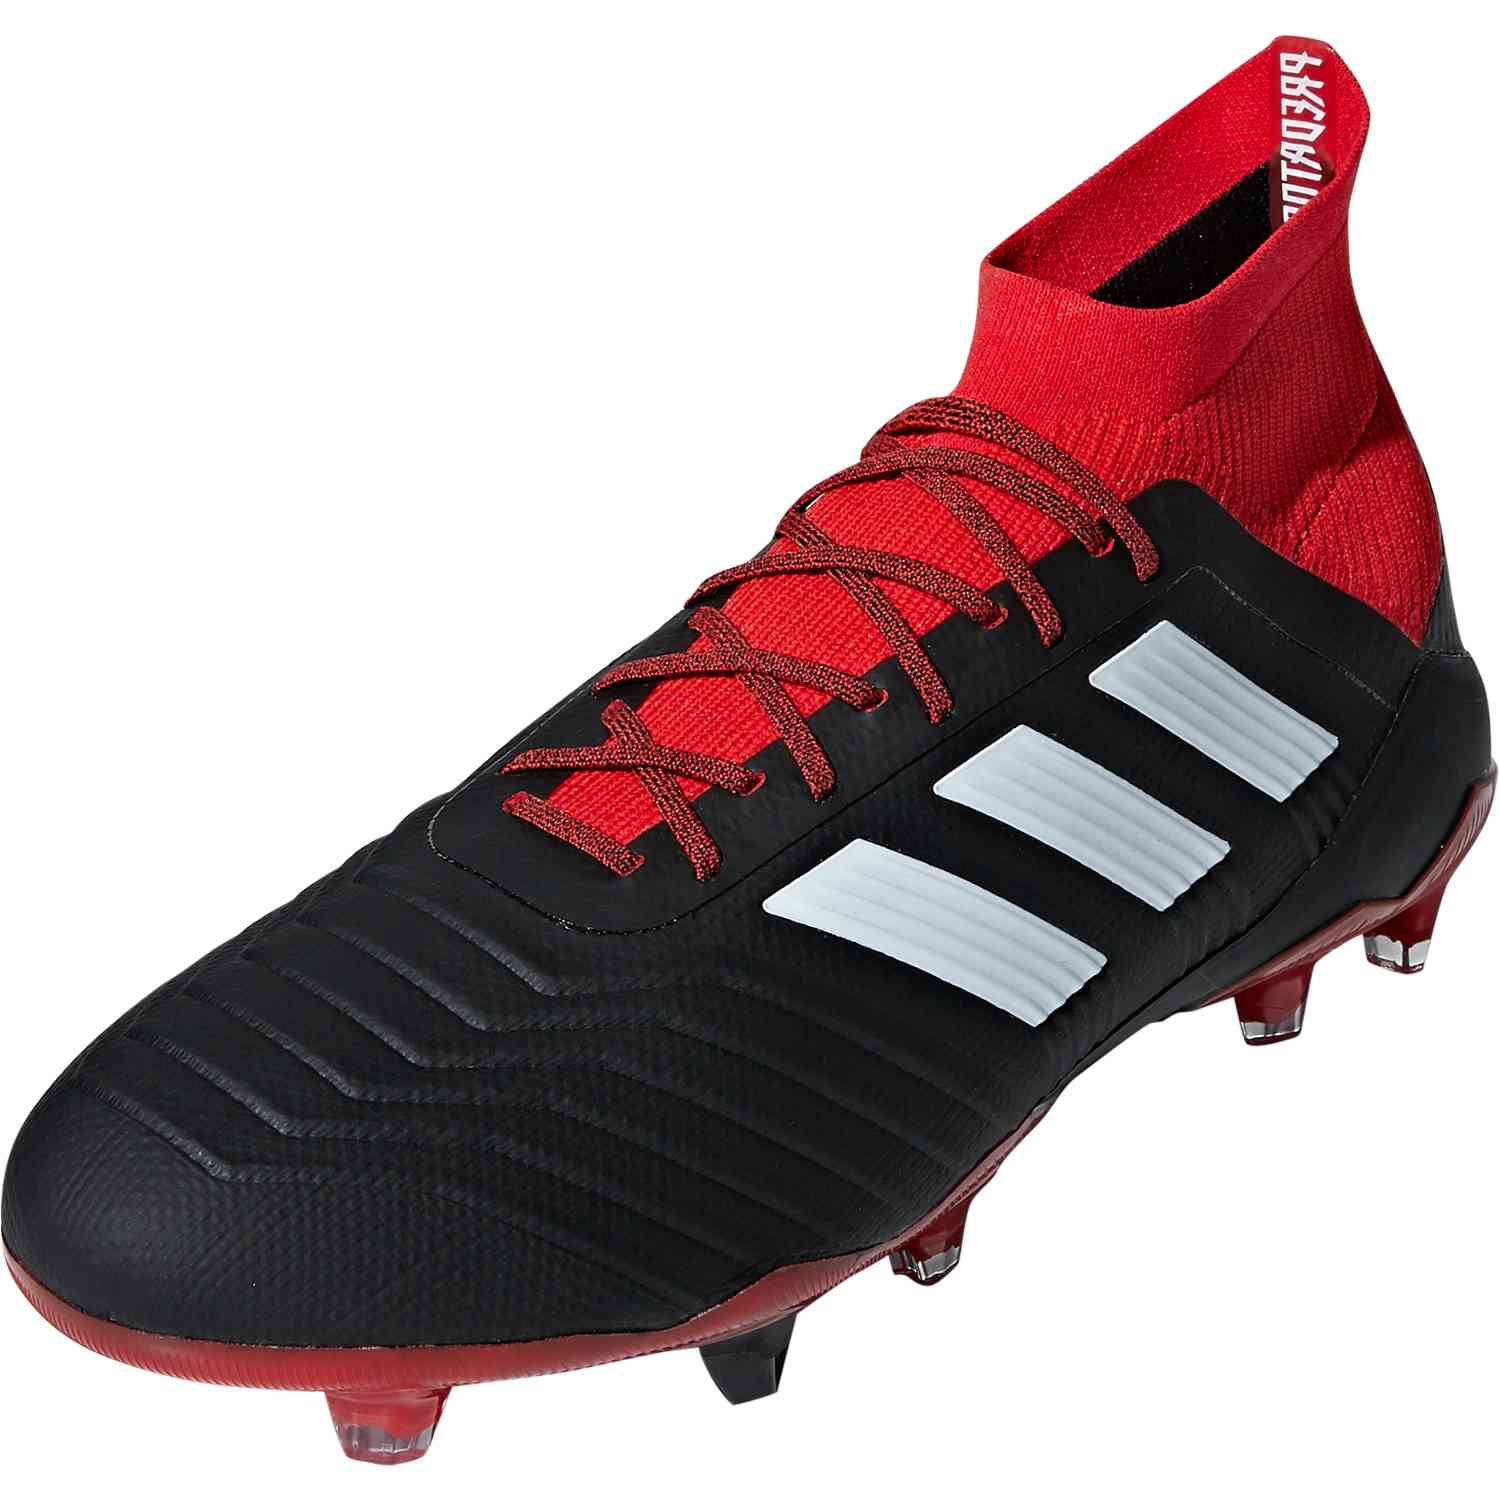 adidas predator 18.1 fg football boots